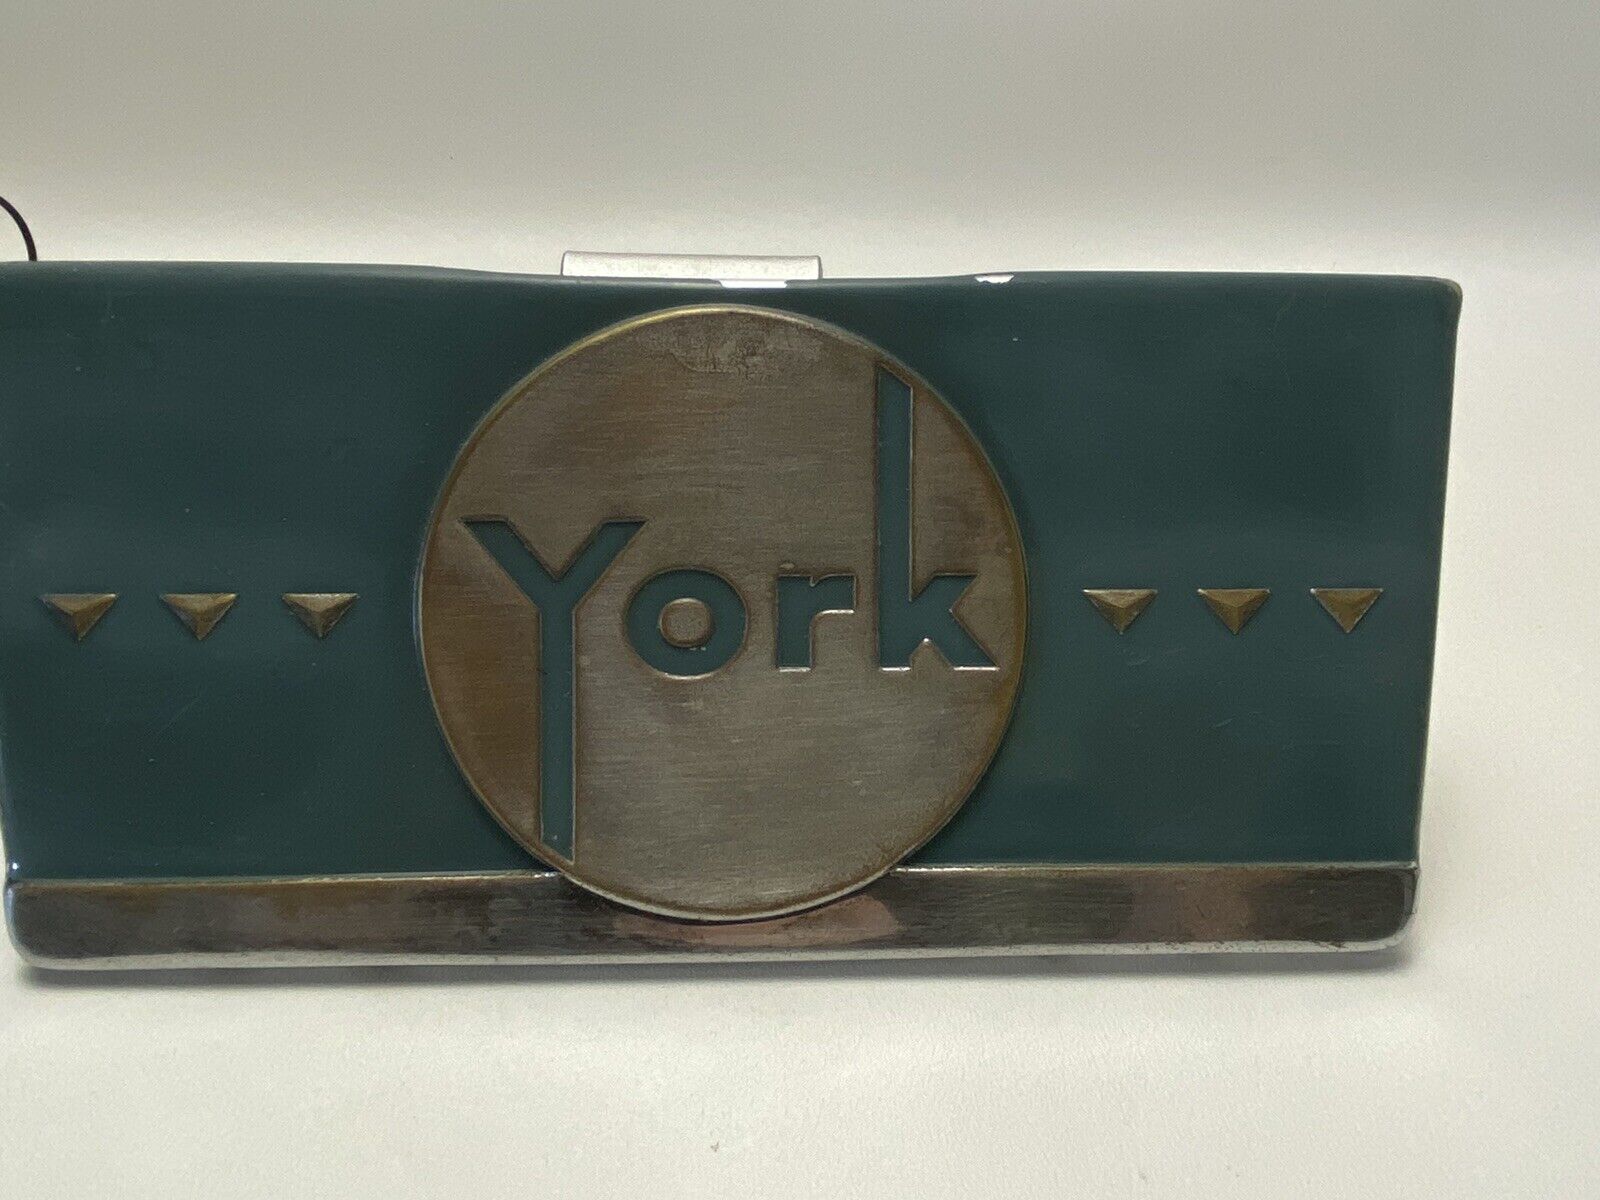 Antique “York” Automobile ? Metal Plaque Sign Placard Chrome Plate Green Finish